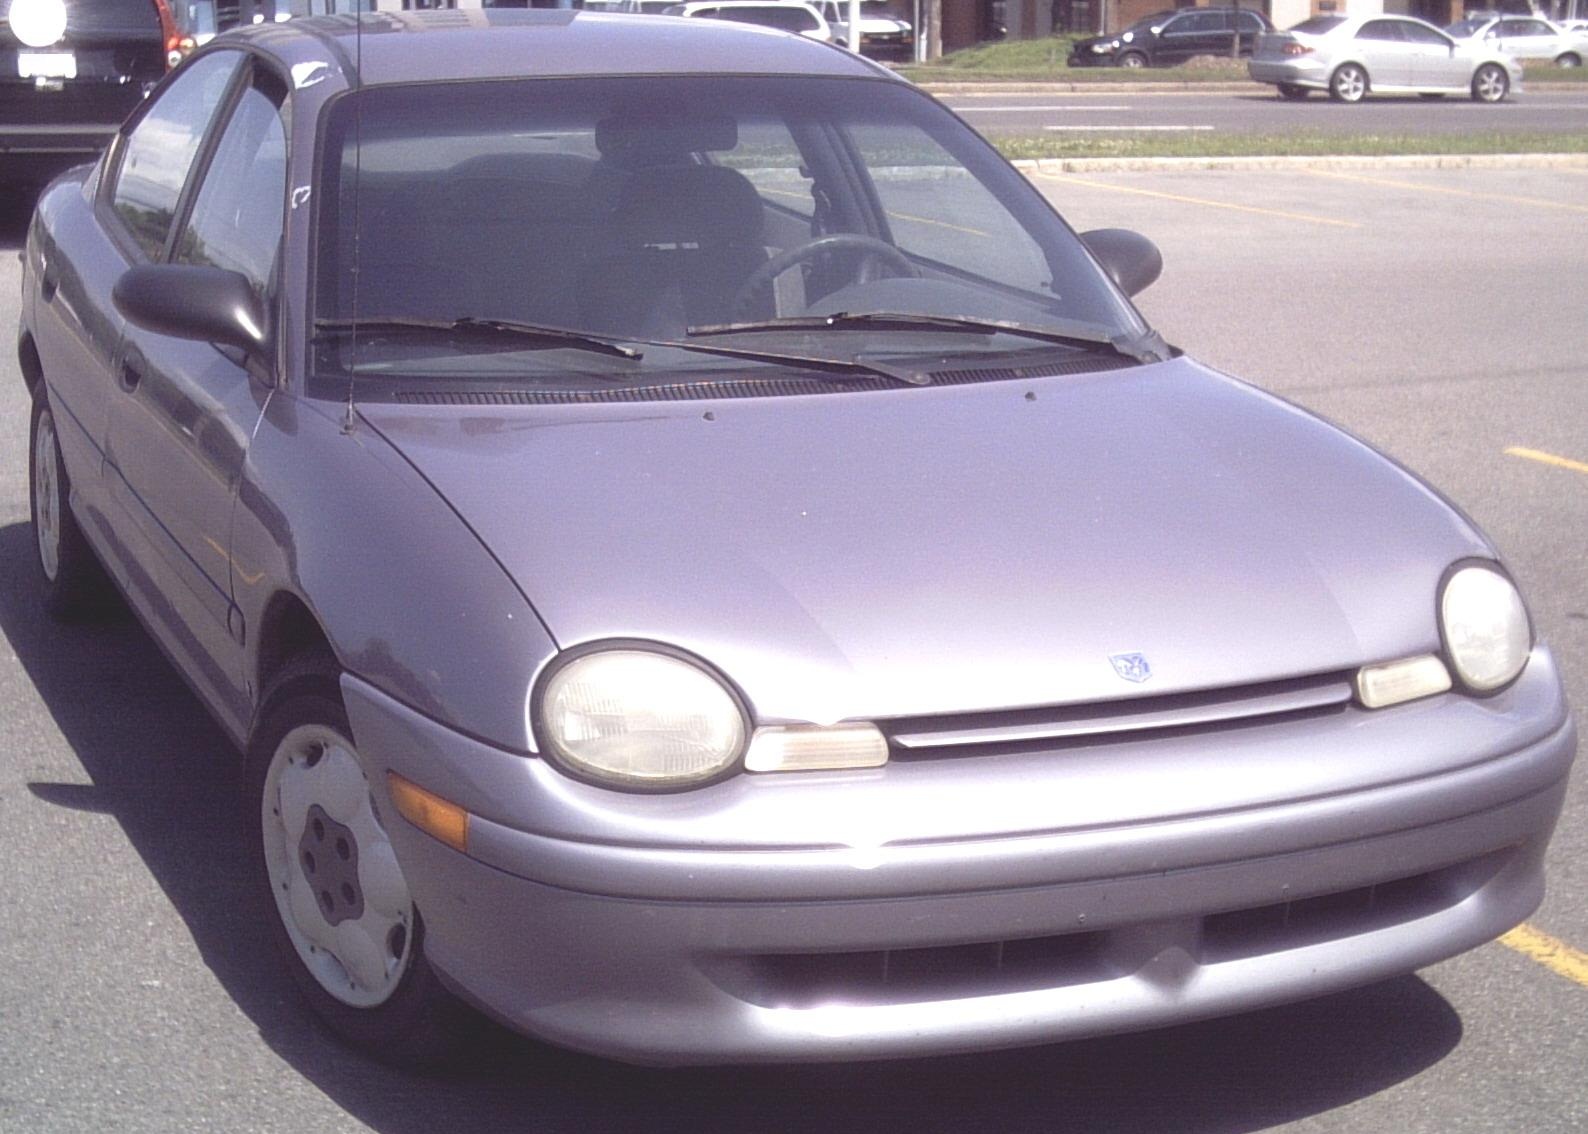 File:'96-'99 Dodge Neon Sedan.jpg - Wikipedia